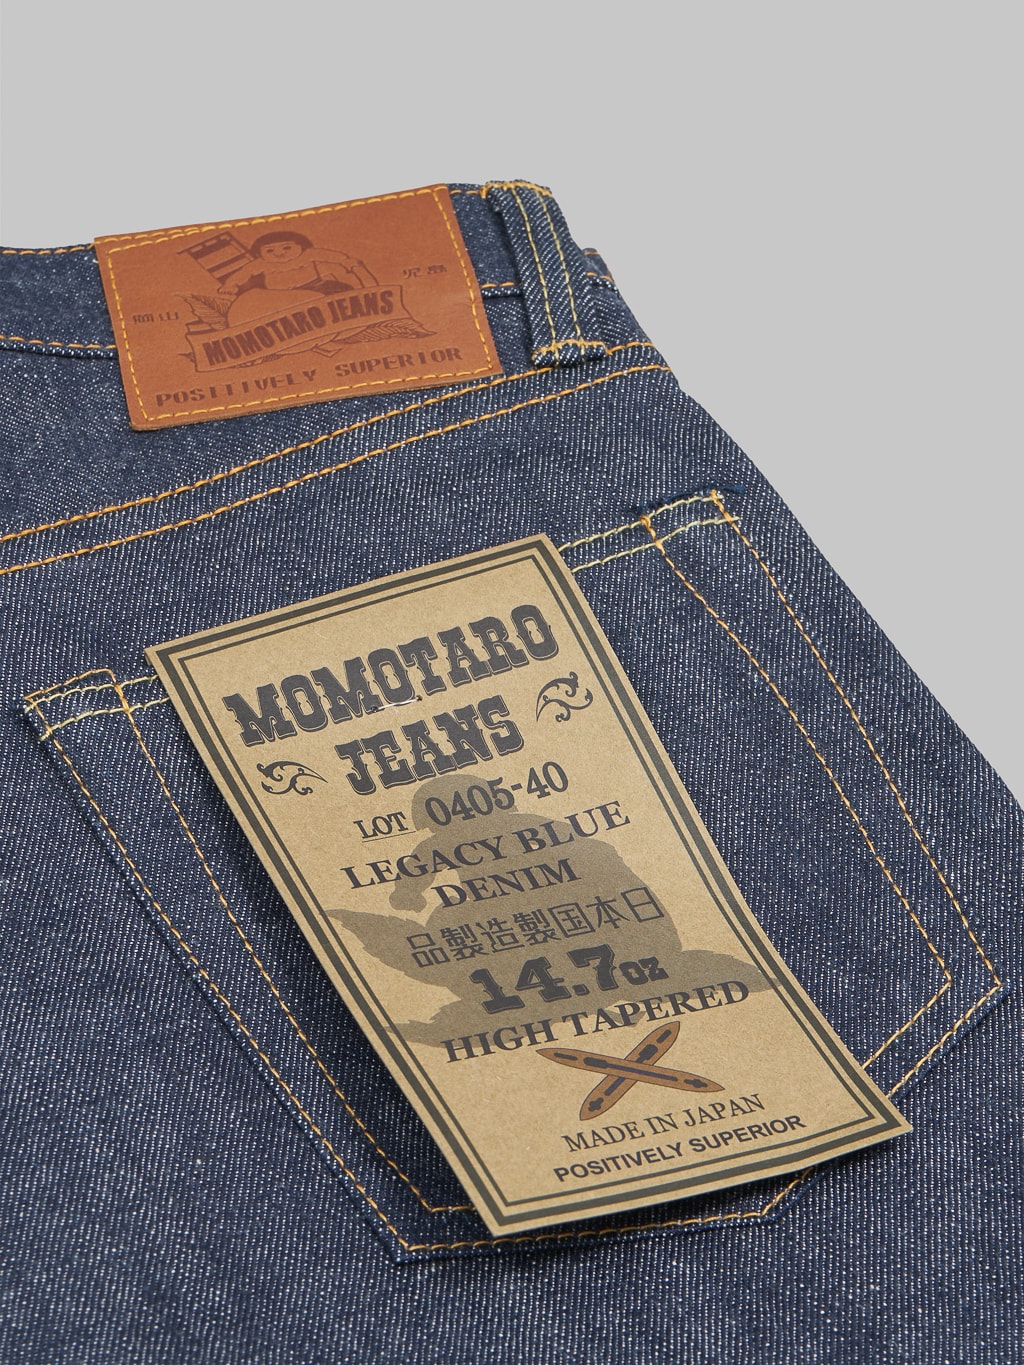 Momotaro legacy blue high tapered jeans back pocket flasher